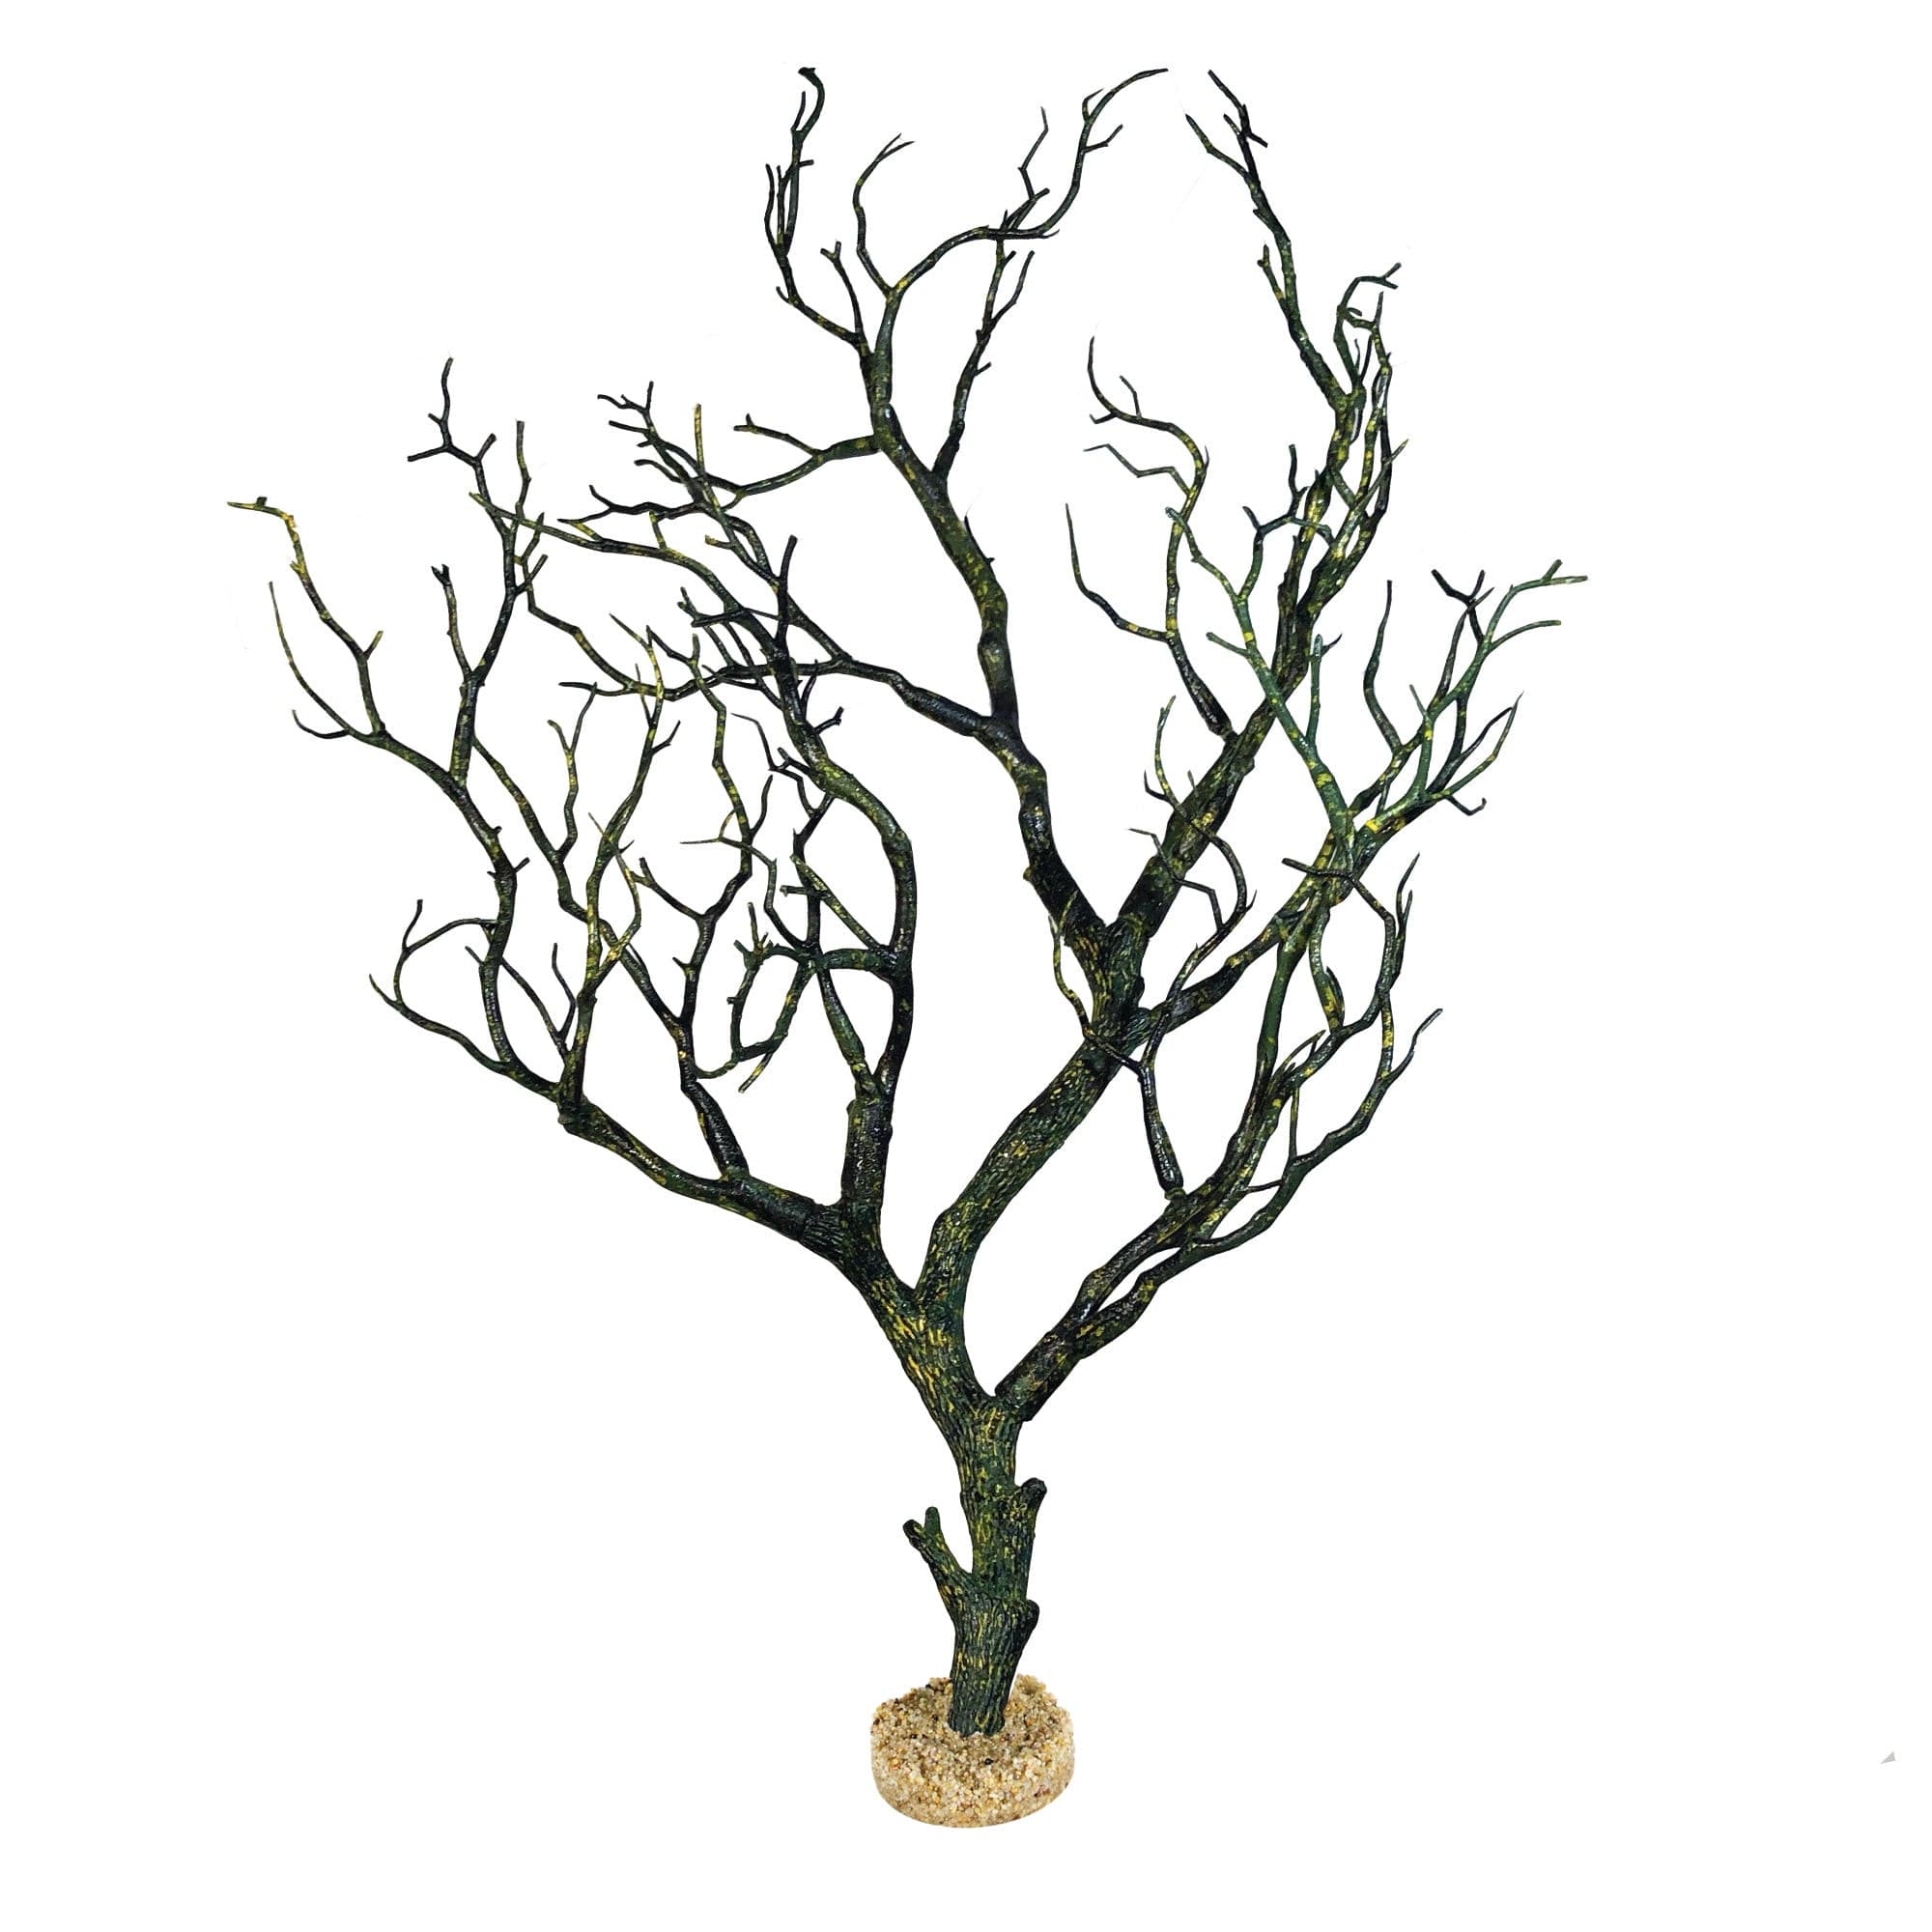 Using Bendable Manzanita Tree Branches